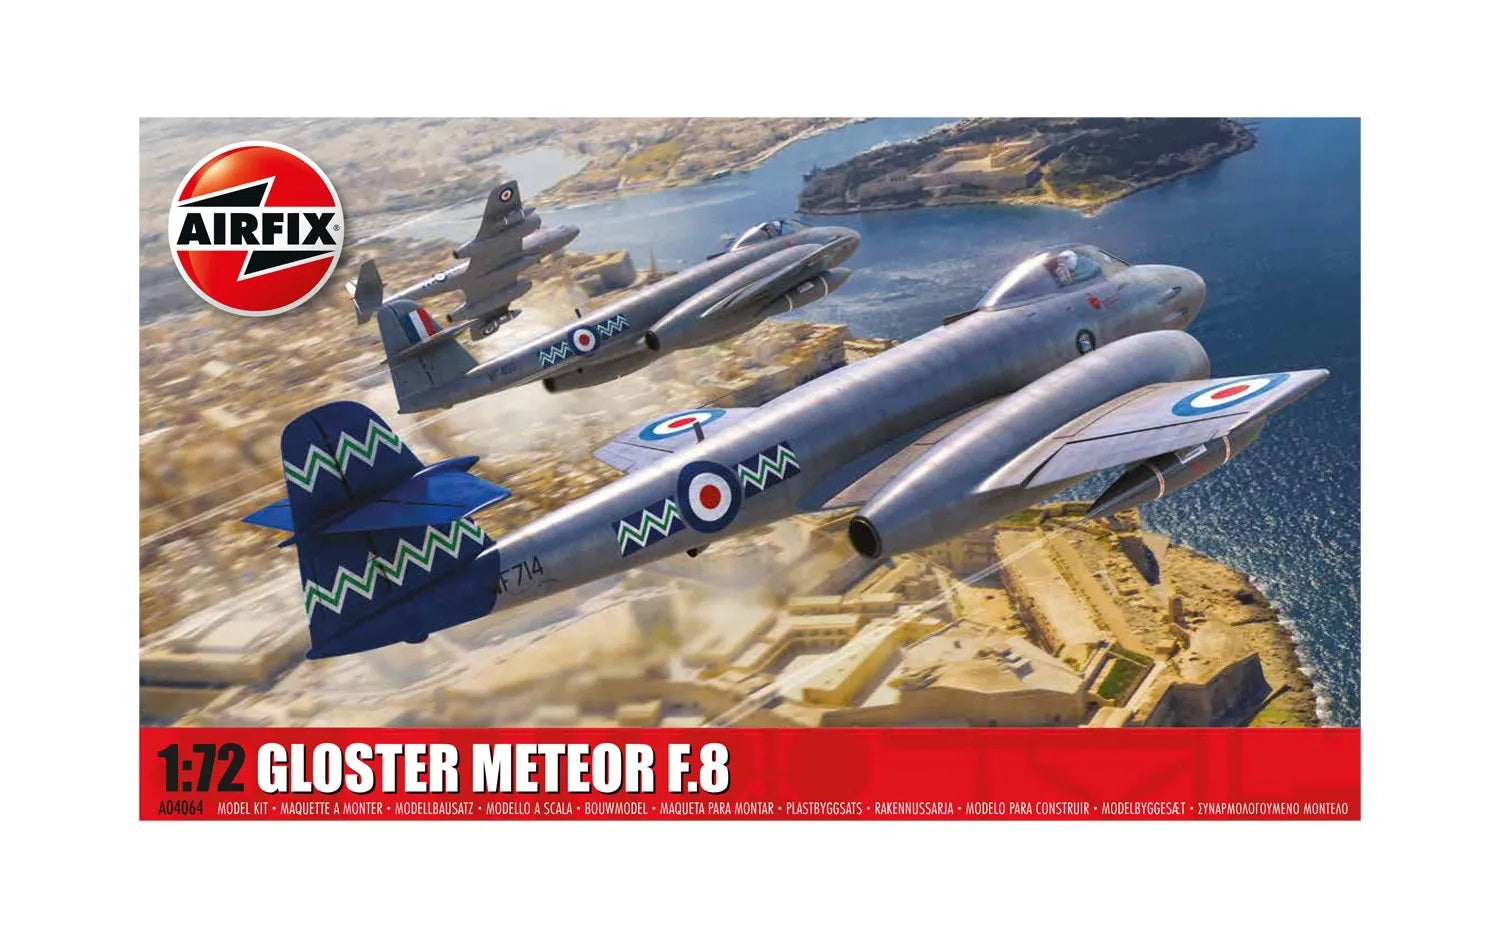 Airfix Gloster Meteor F8 1/72 04064